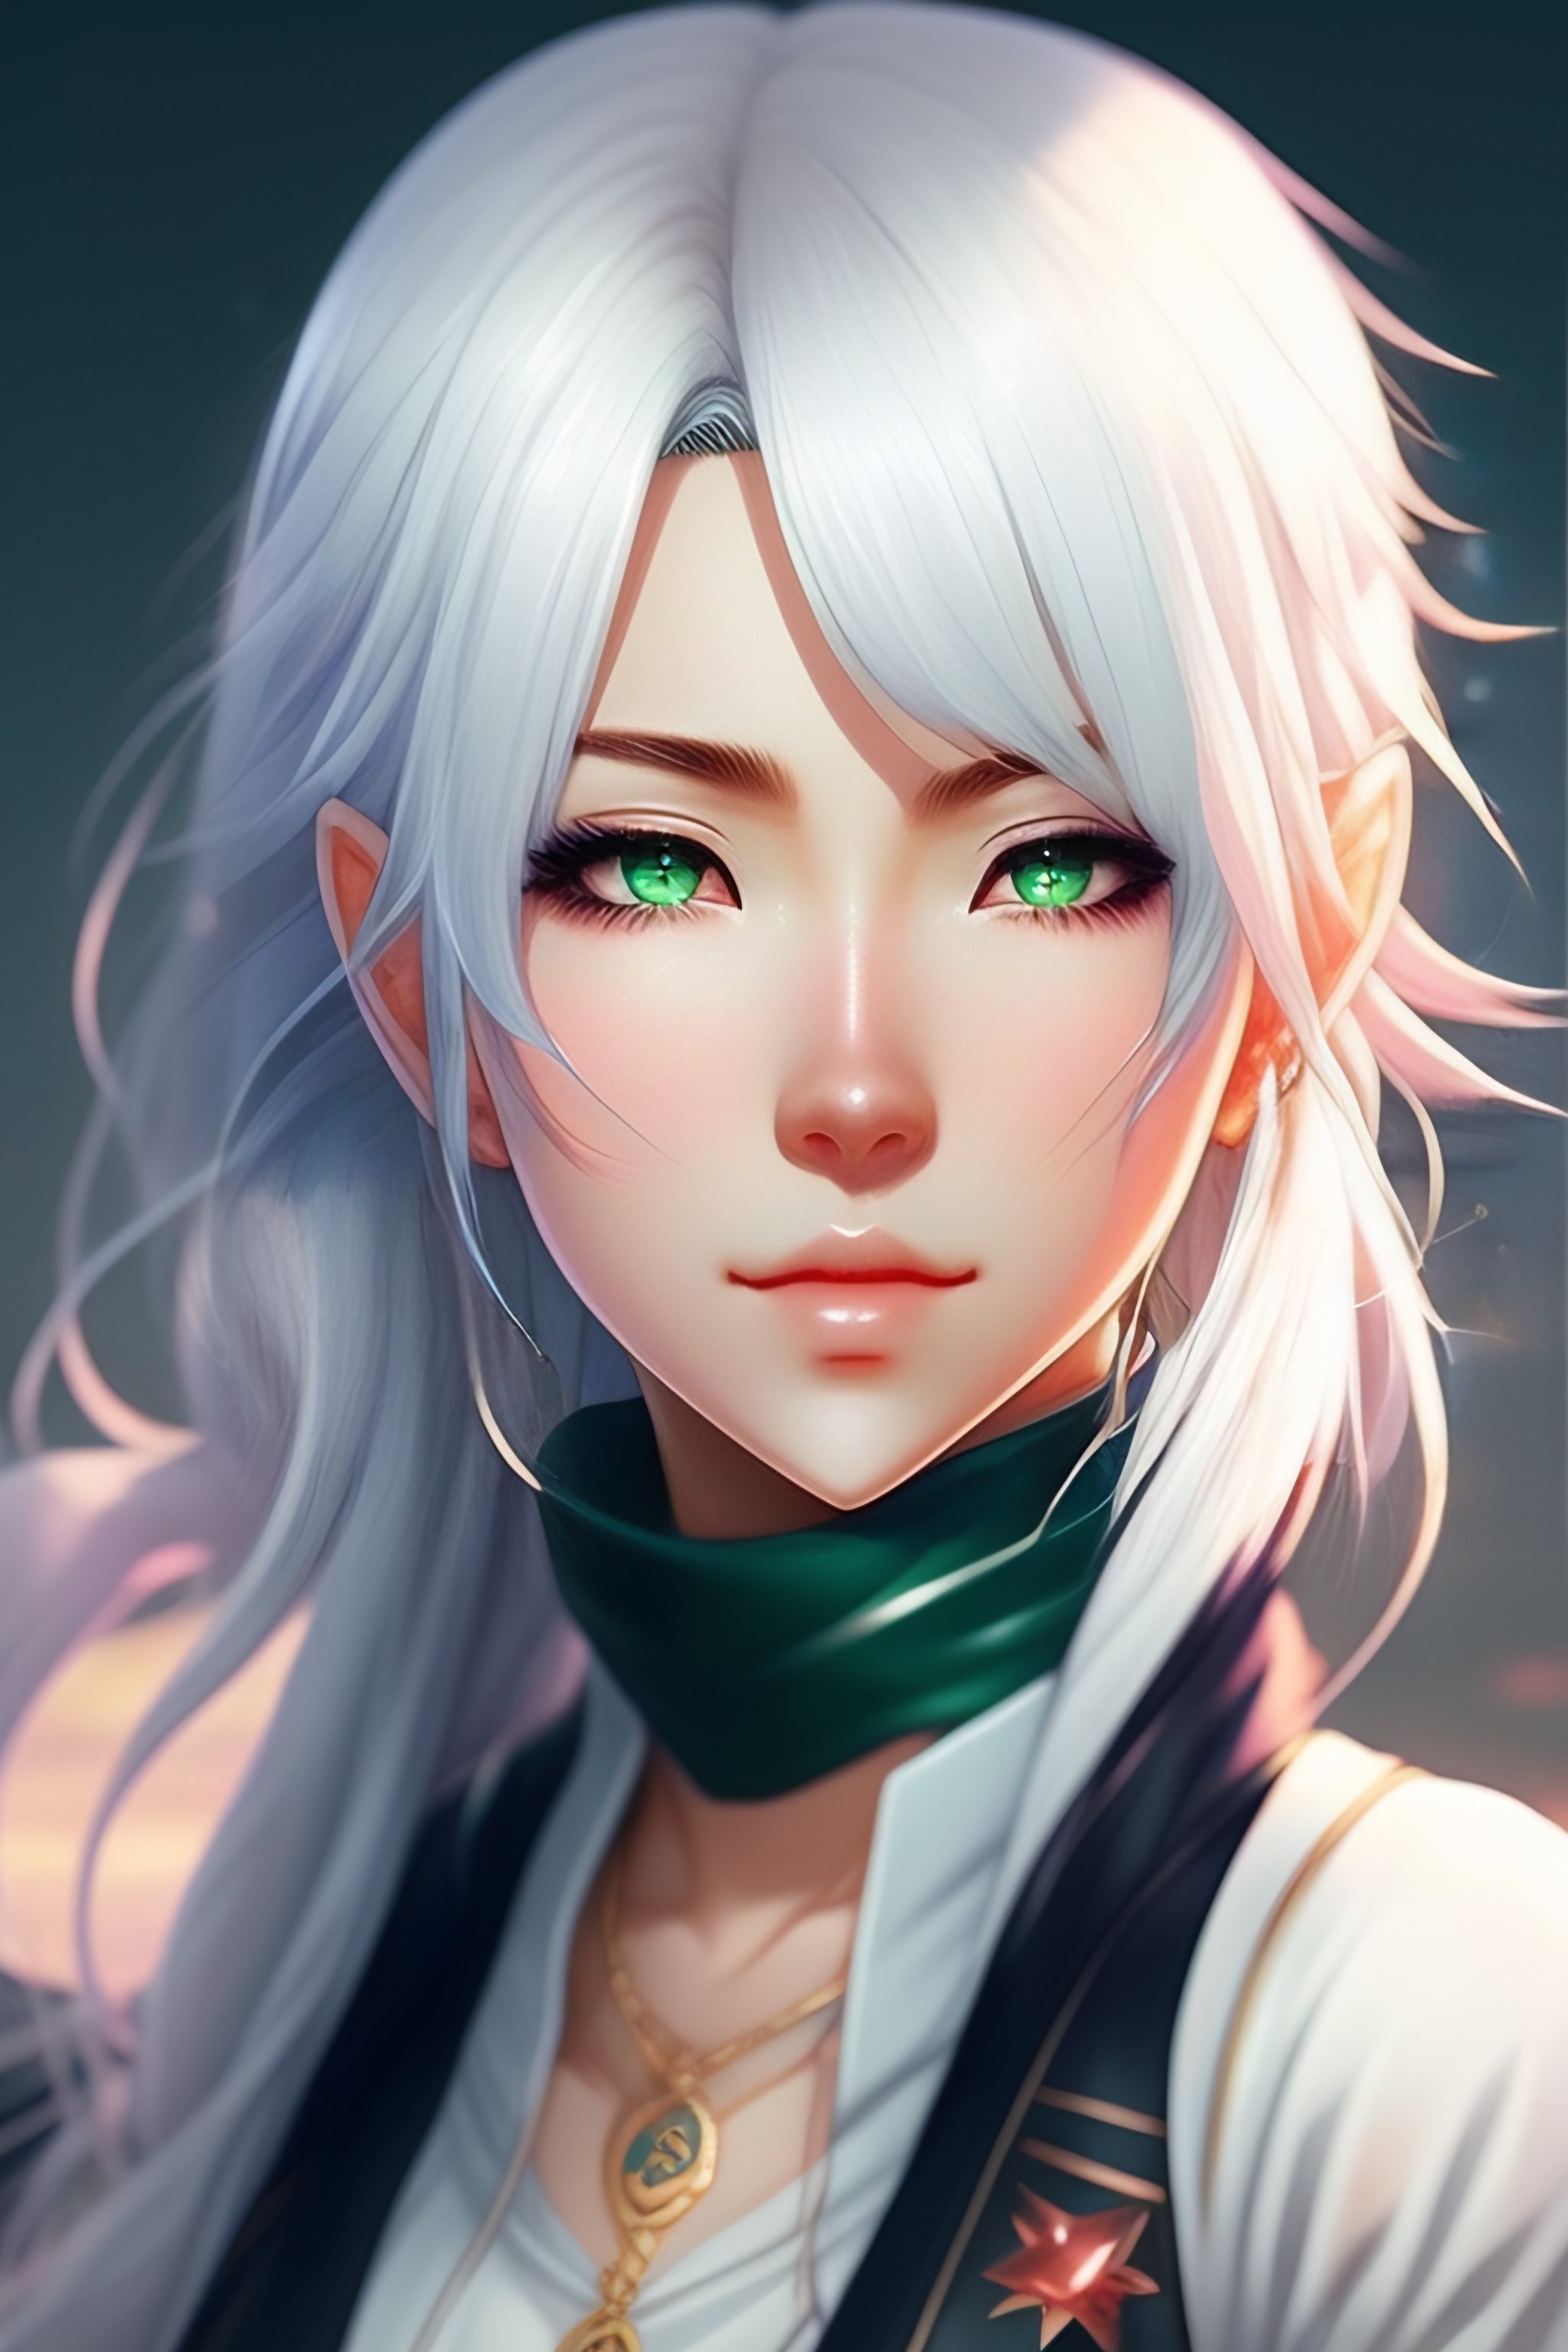 Lexica A Anime Girl Green Eyes With White Hair Very Cute